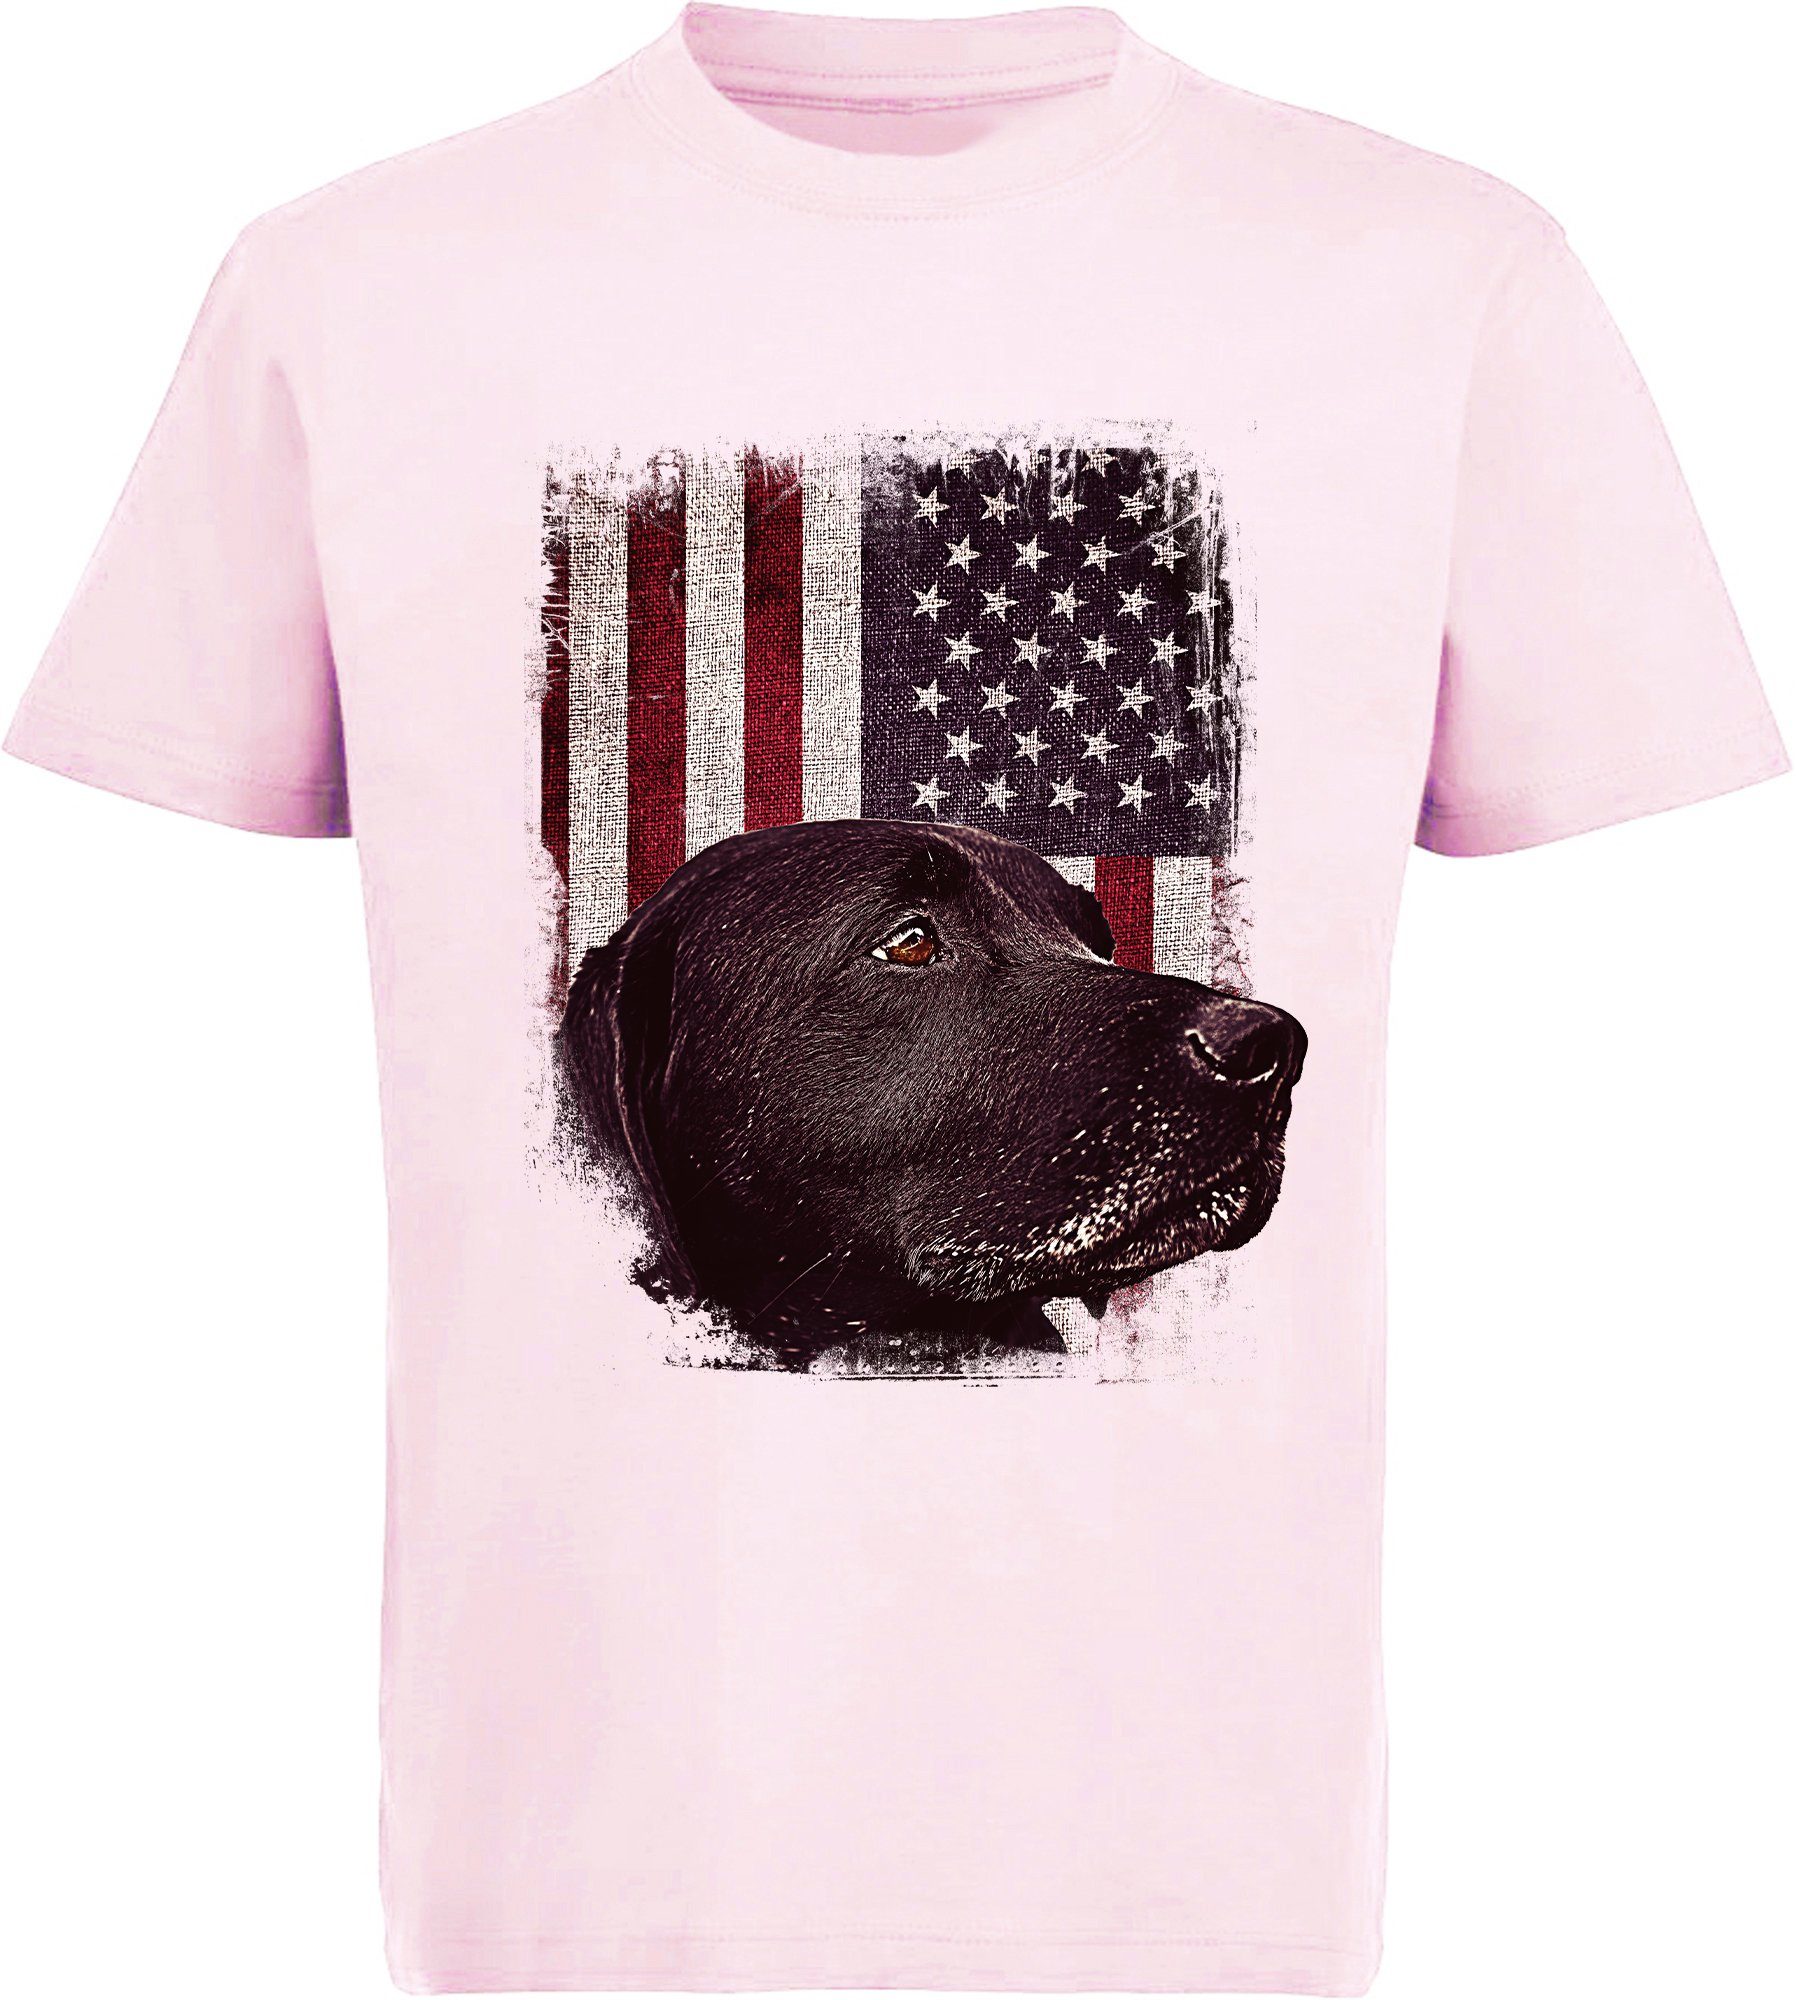 MyDesign24 T-Shirt Kinder Hunde Print Shirt bedruckt - schwarzer Labrador vor USA Flagge Baumwollshirt mit Aufdruck, i246 rosa